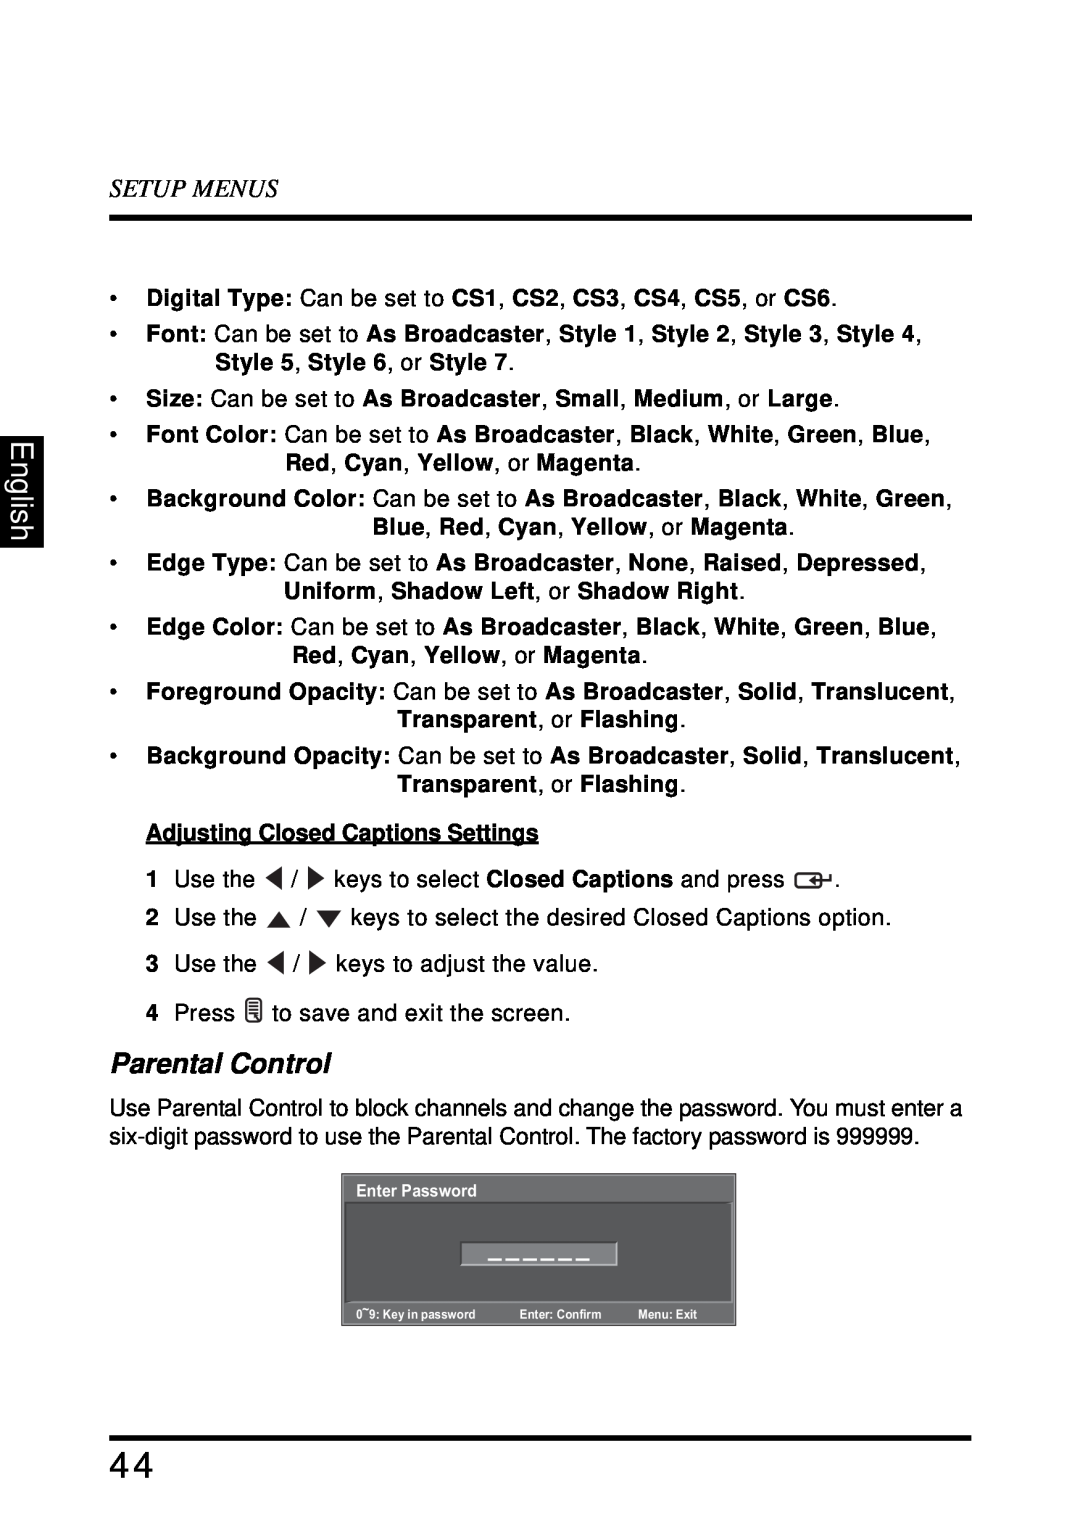 Westinghouse LD-4680 user manual Parental Control, English, Setup Menus 